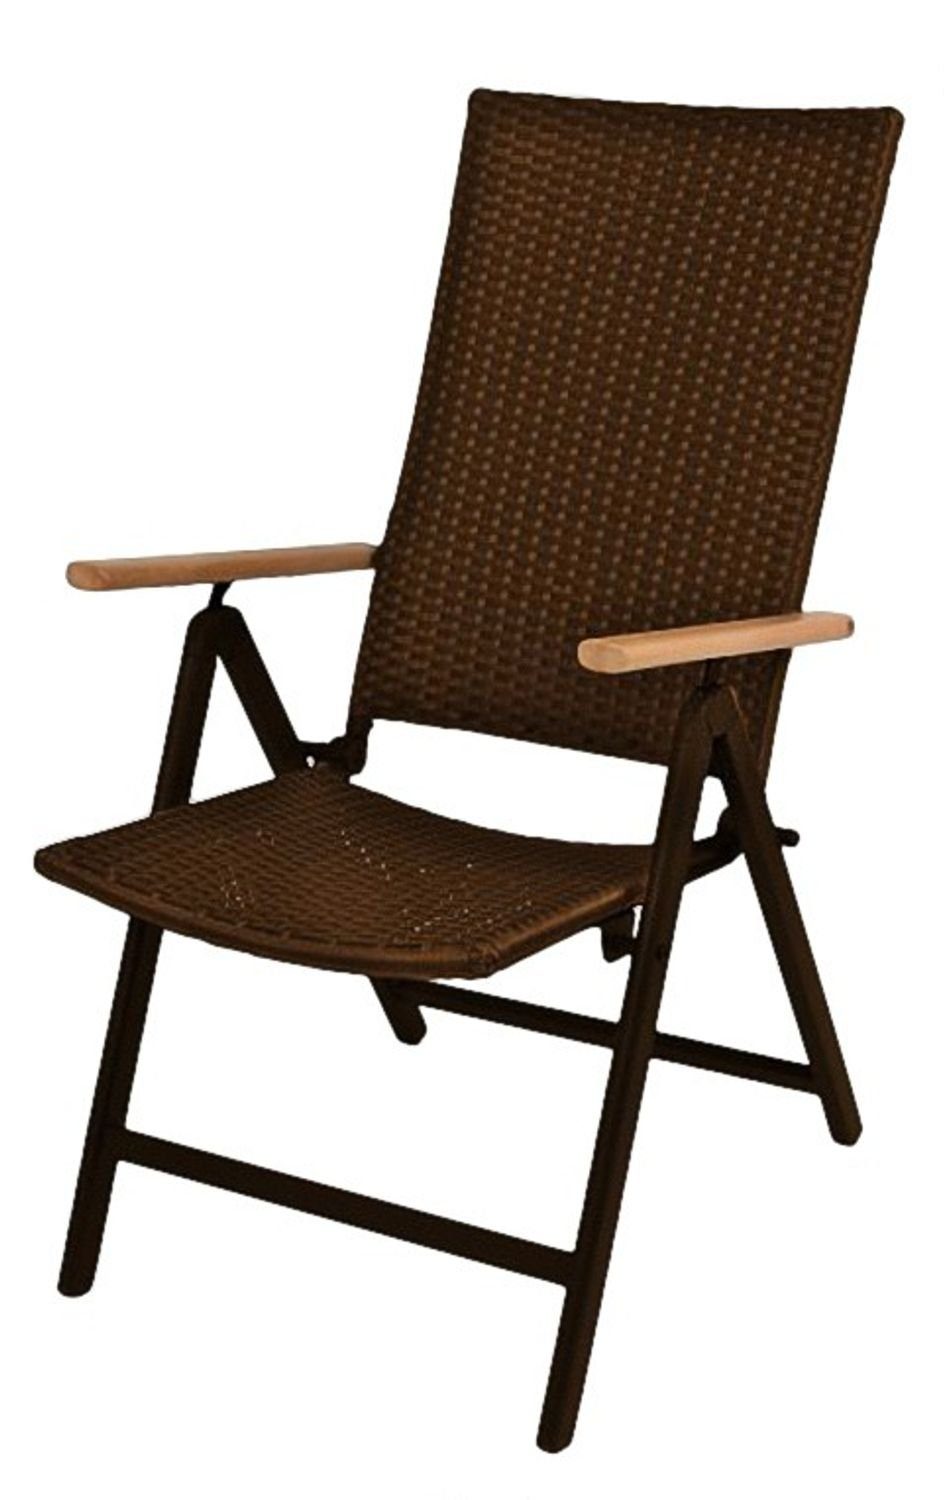 BURI Gartenstuhl Alu-Klappsessel Sessel braun schwarz Serra Relax Gartenstuhl oder